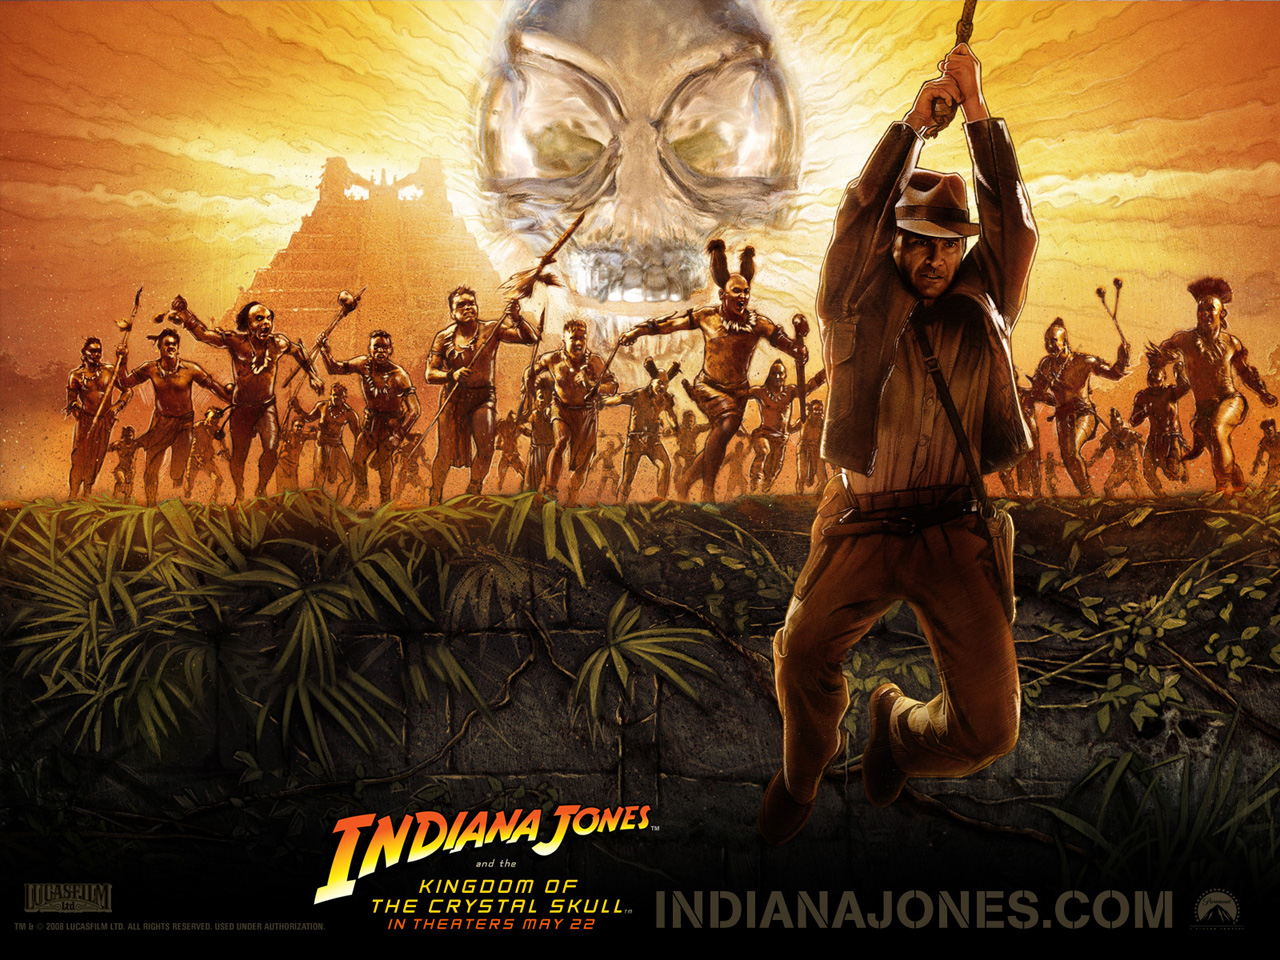 "Indiana Jones and the Kingdom of the Crystal Skull" desktop wallpaper (1280 x 960 pixels)